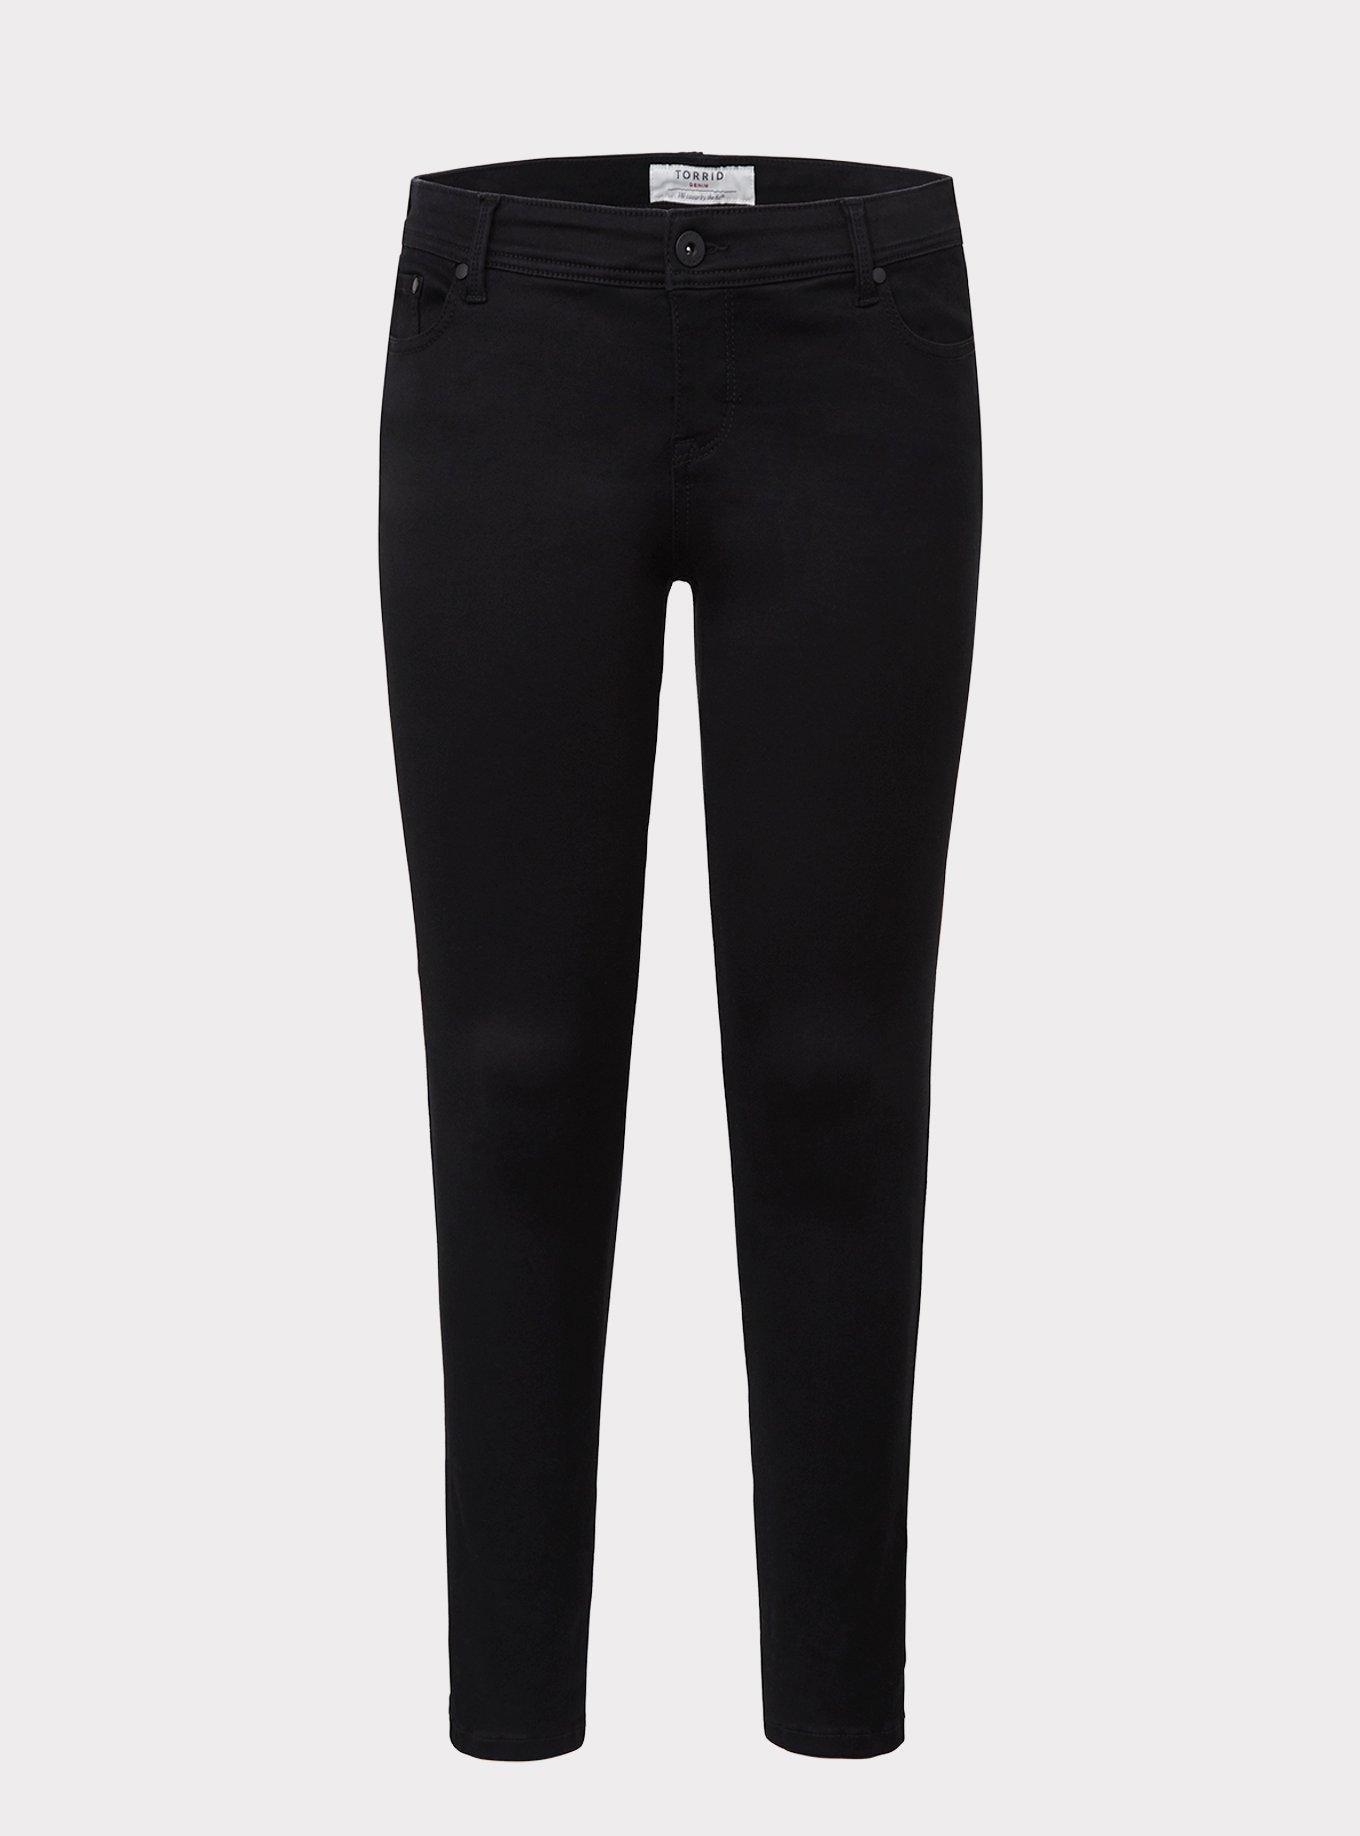 1826 Stretchy Premium Capri Black Denim Jeans HIGH Waist Womens Plus Size  PC-918